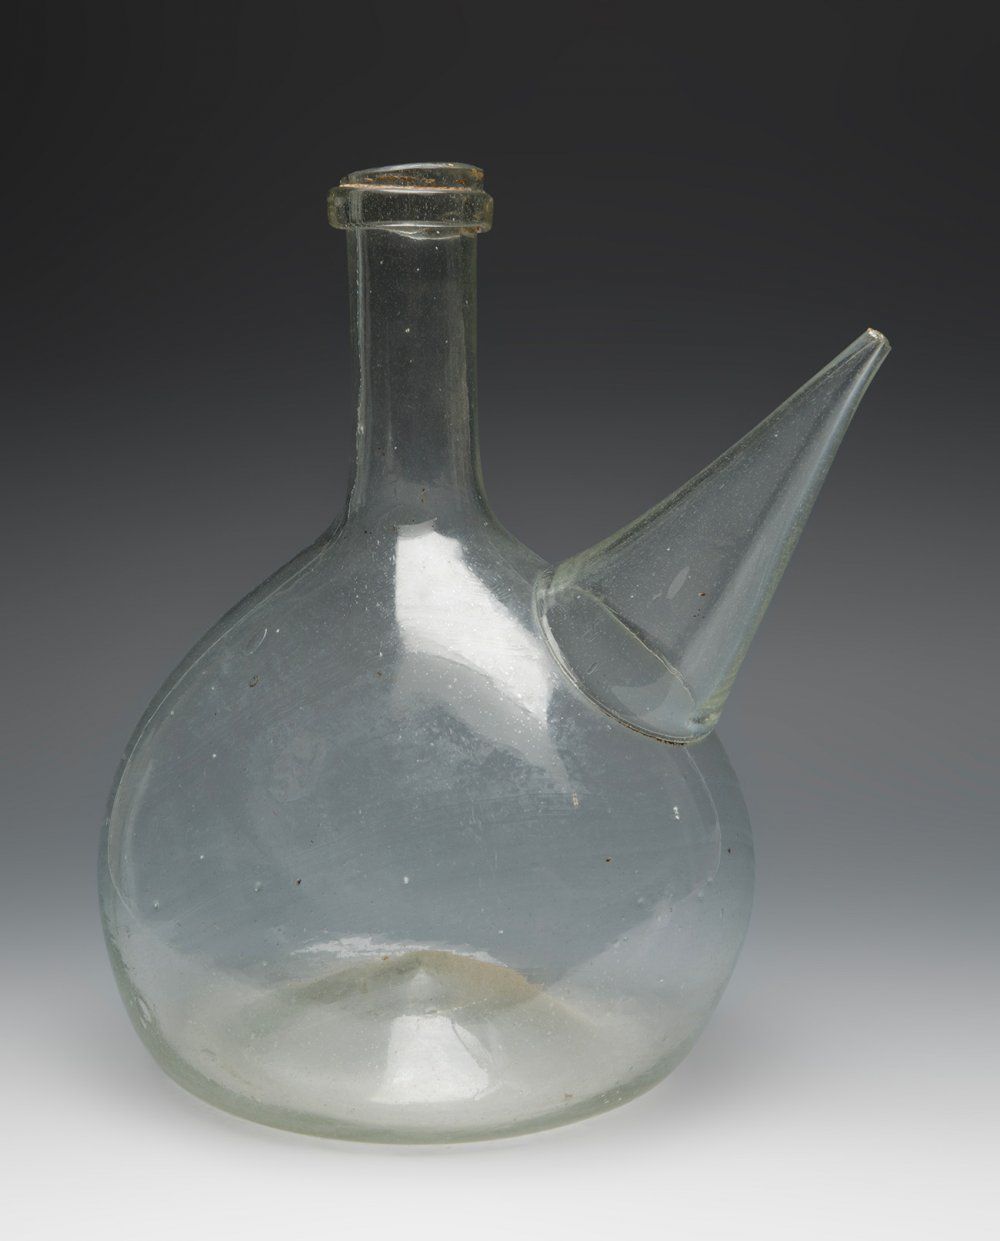 Null 18th century catalan porrón.
Blown glass.
It has hair and very slight flaki&hellip;